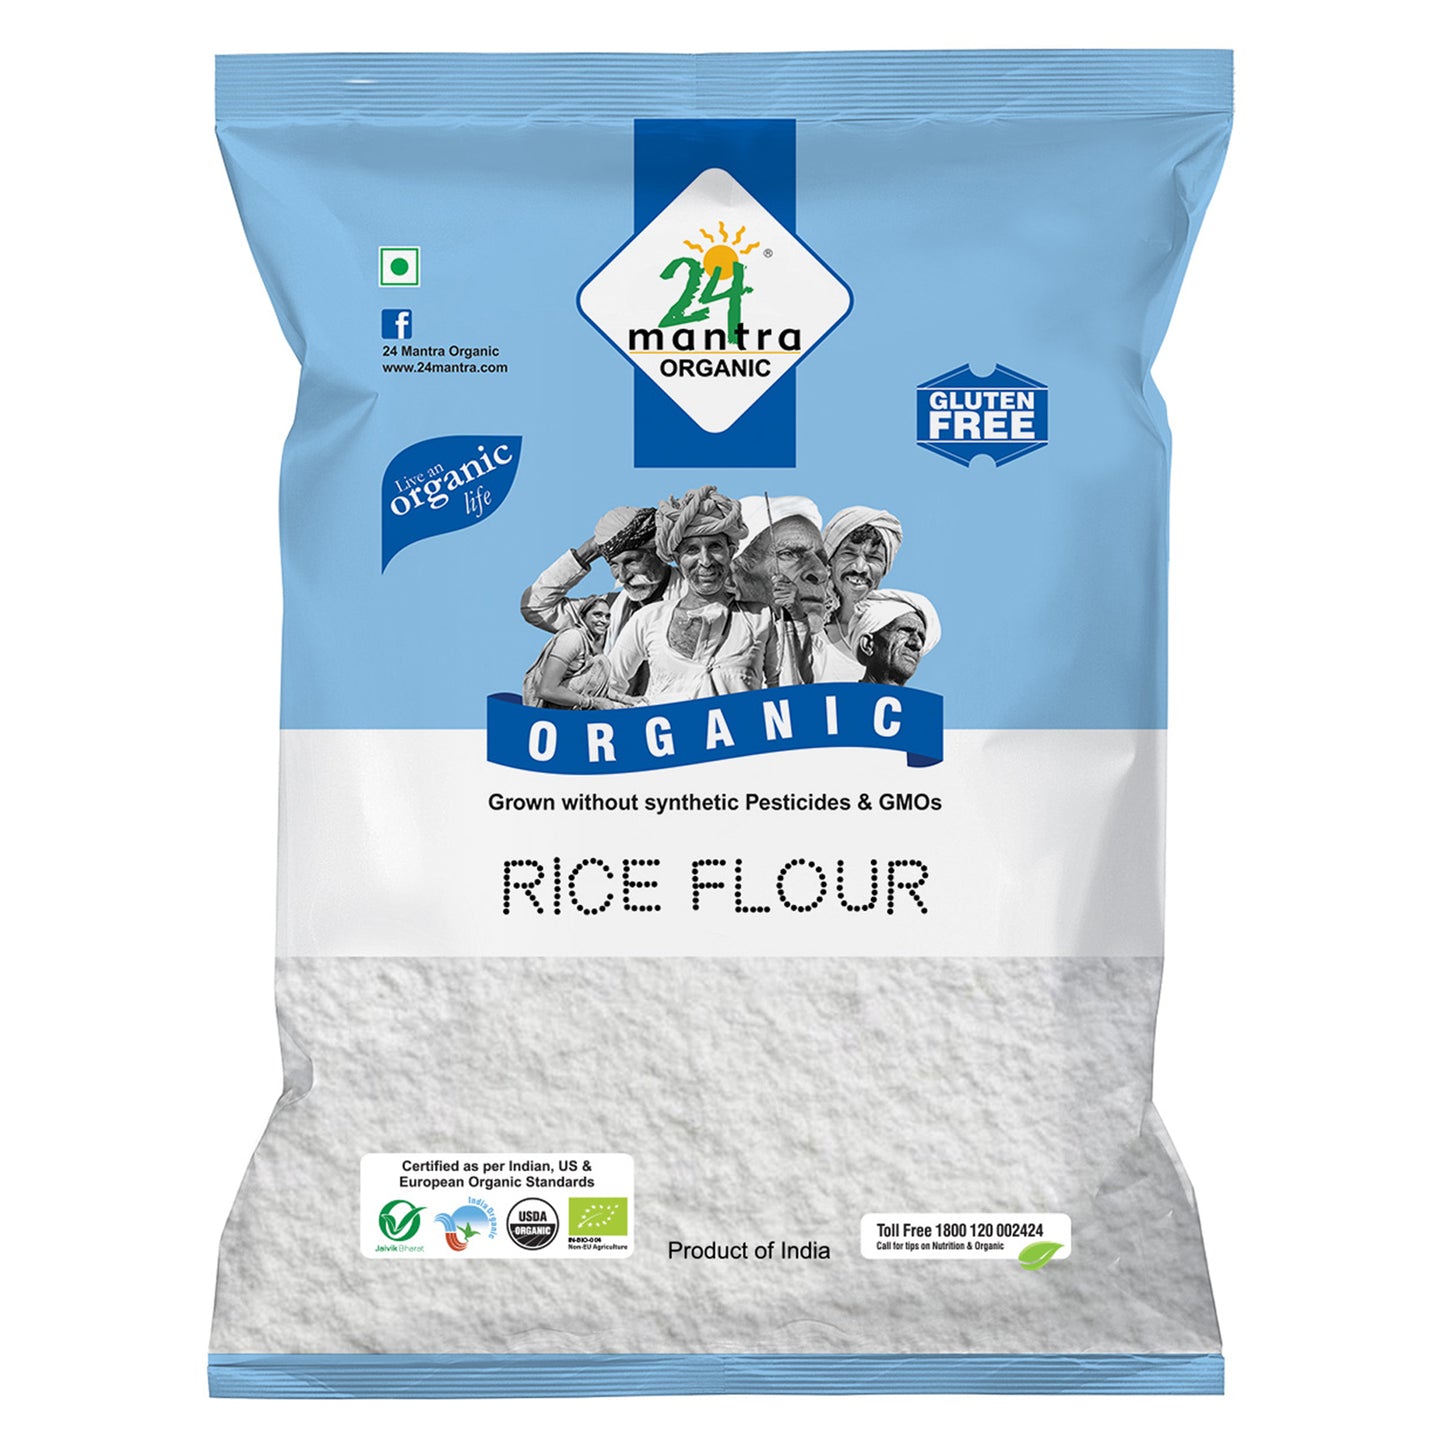 Organic Rice Flour 500Gm